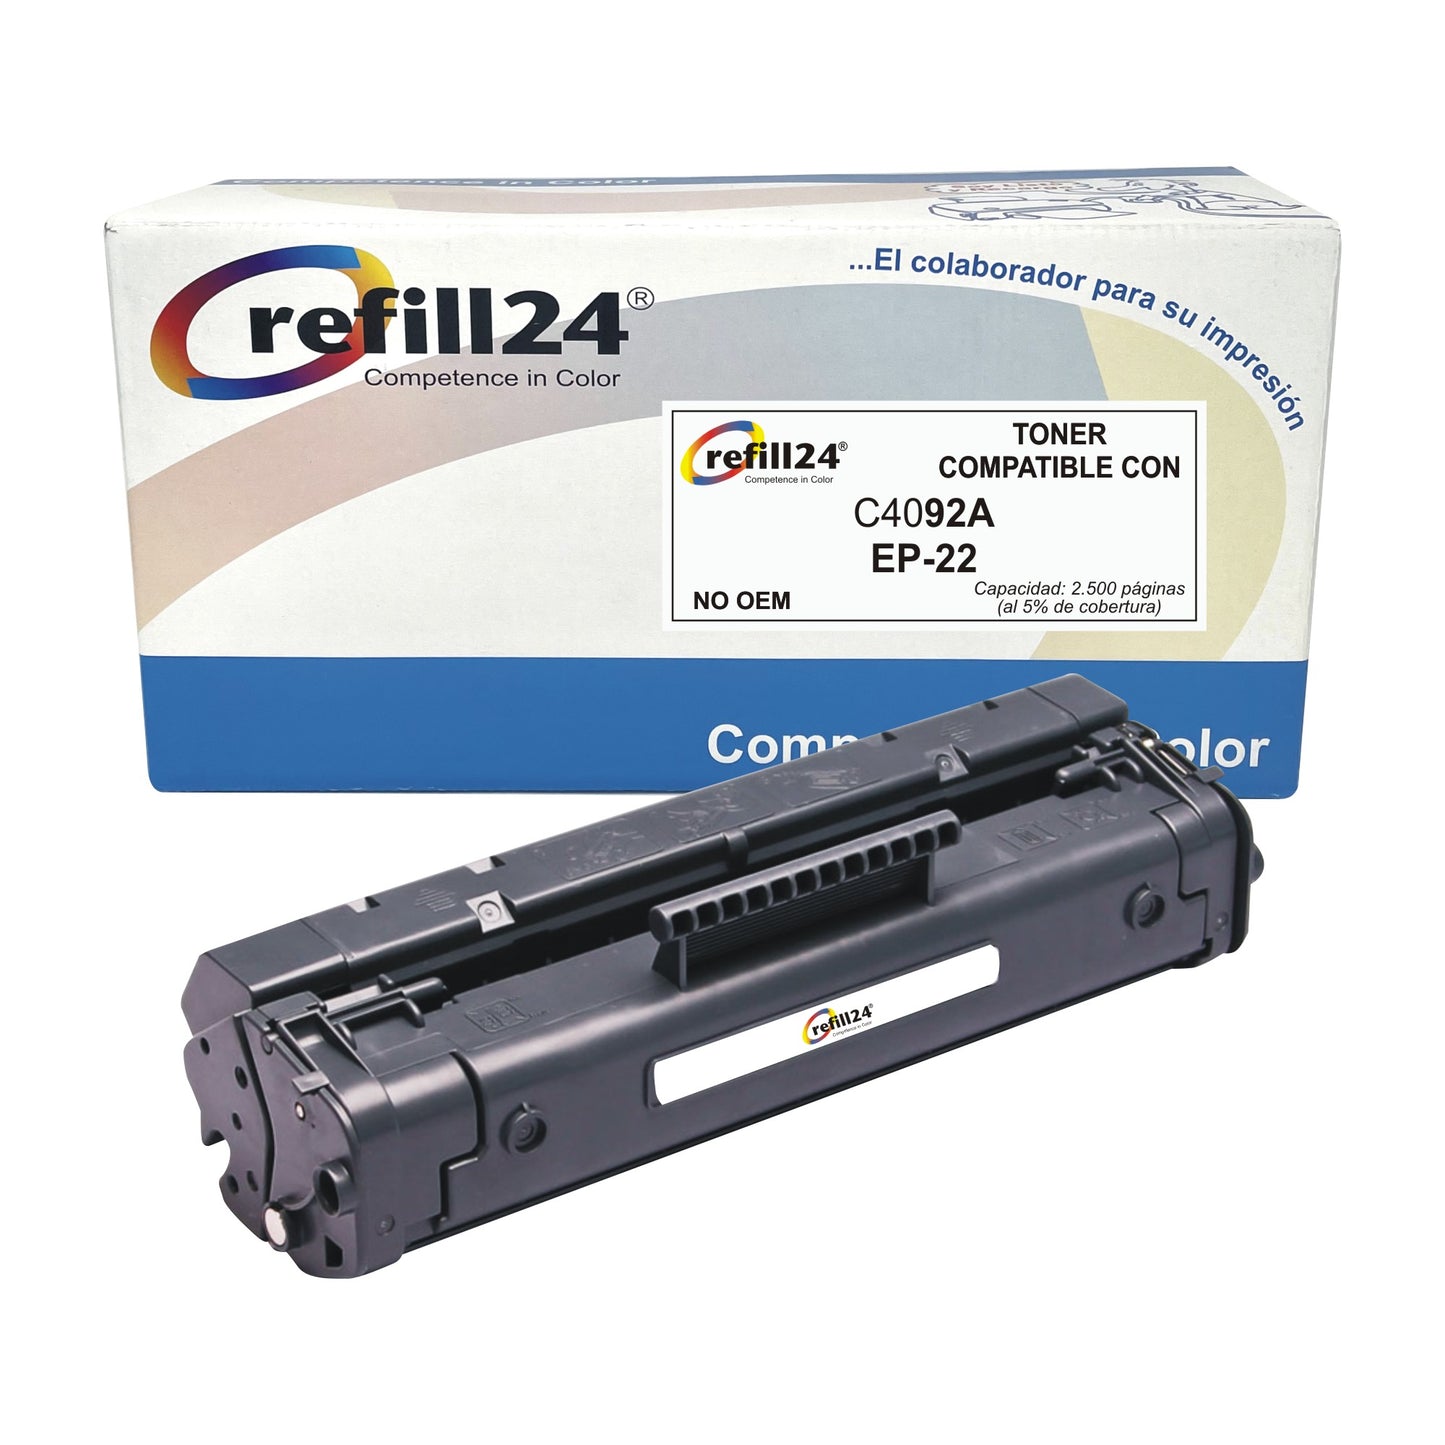 Toner compatible con HP C4092A | Canon EP-22